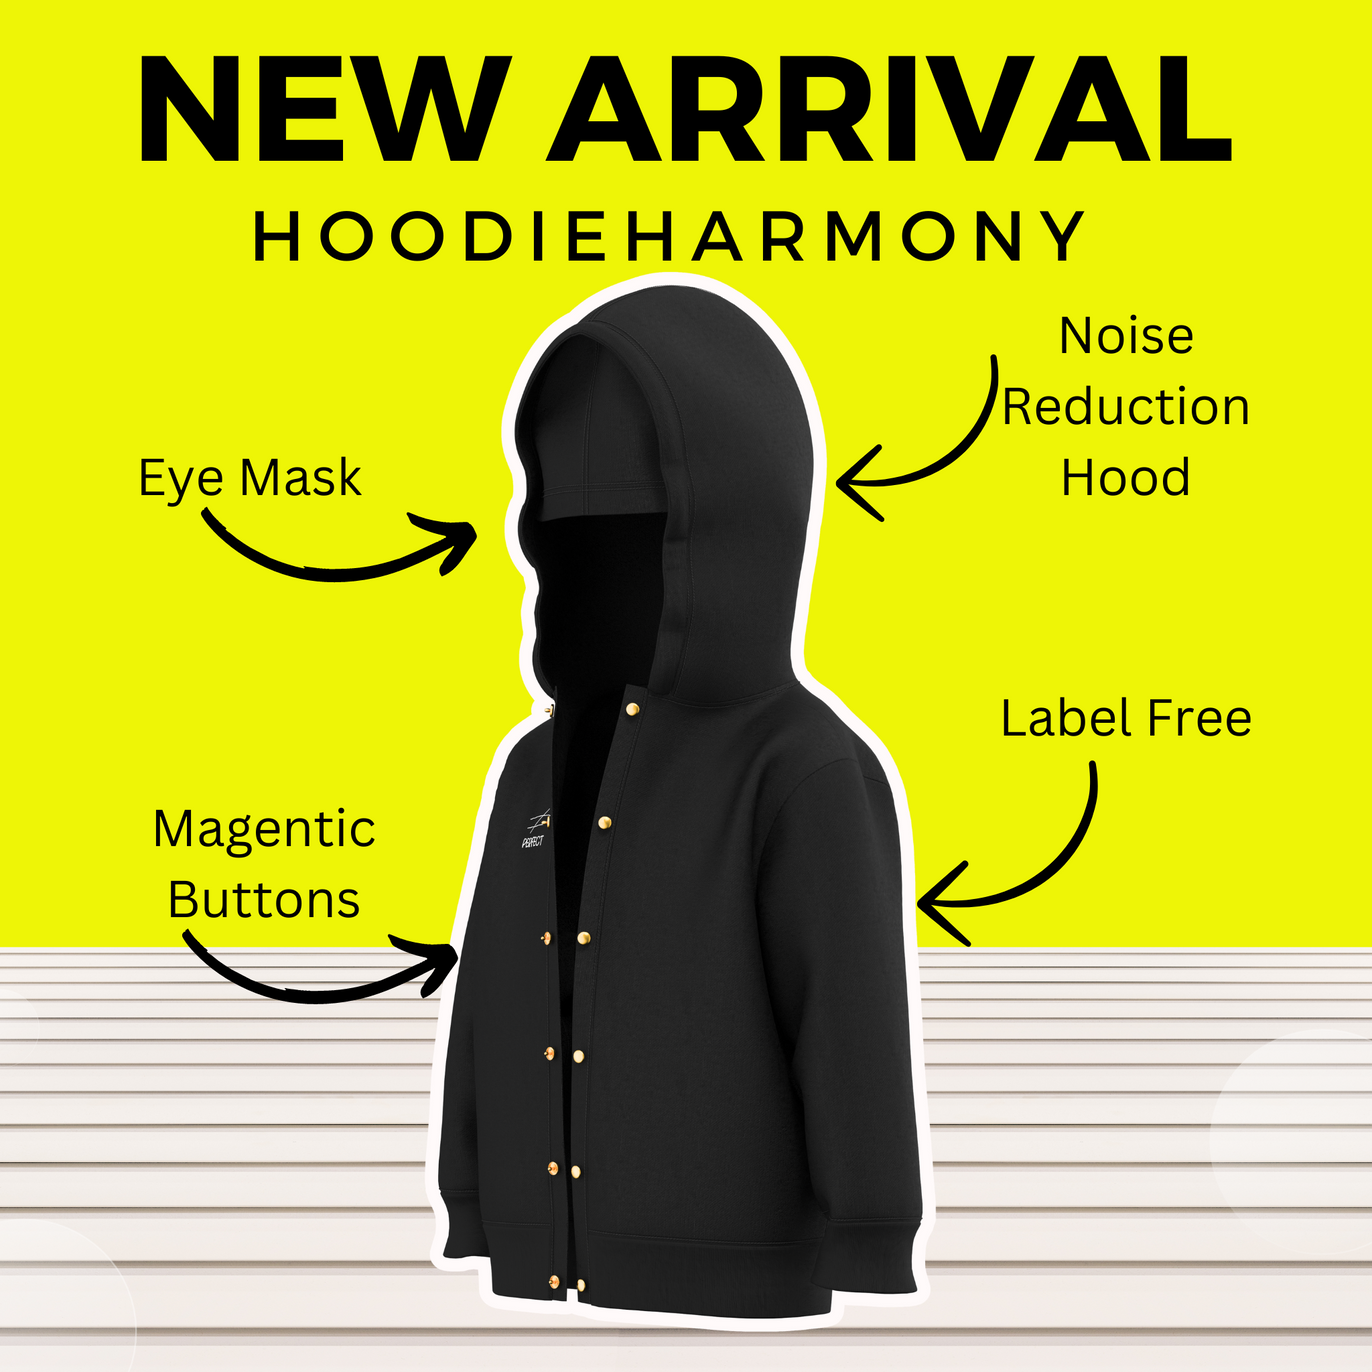 Sensory Hoodie Harmony Features